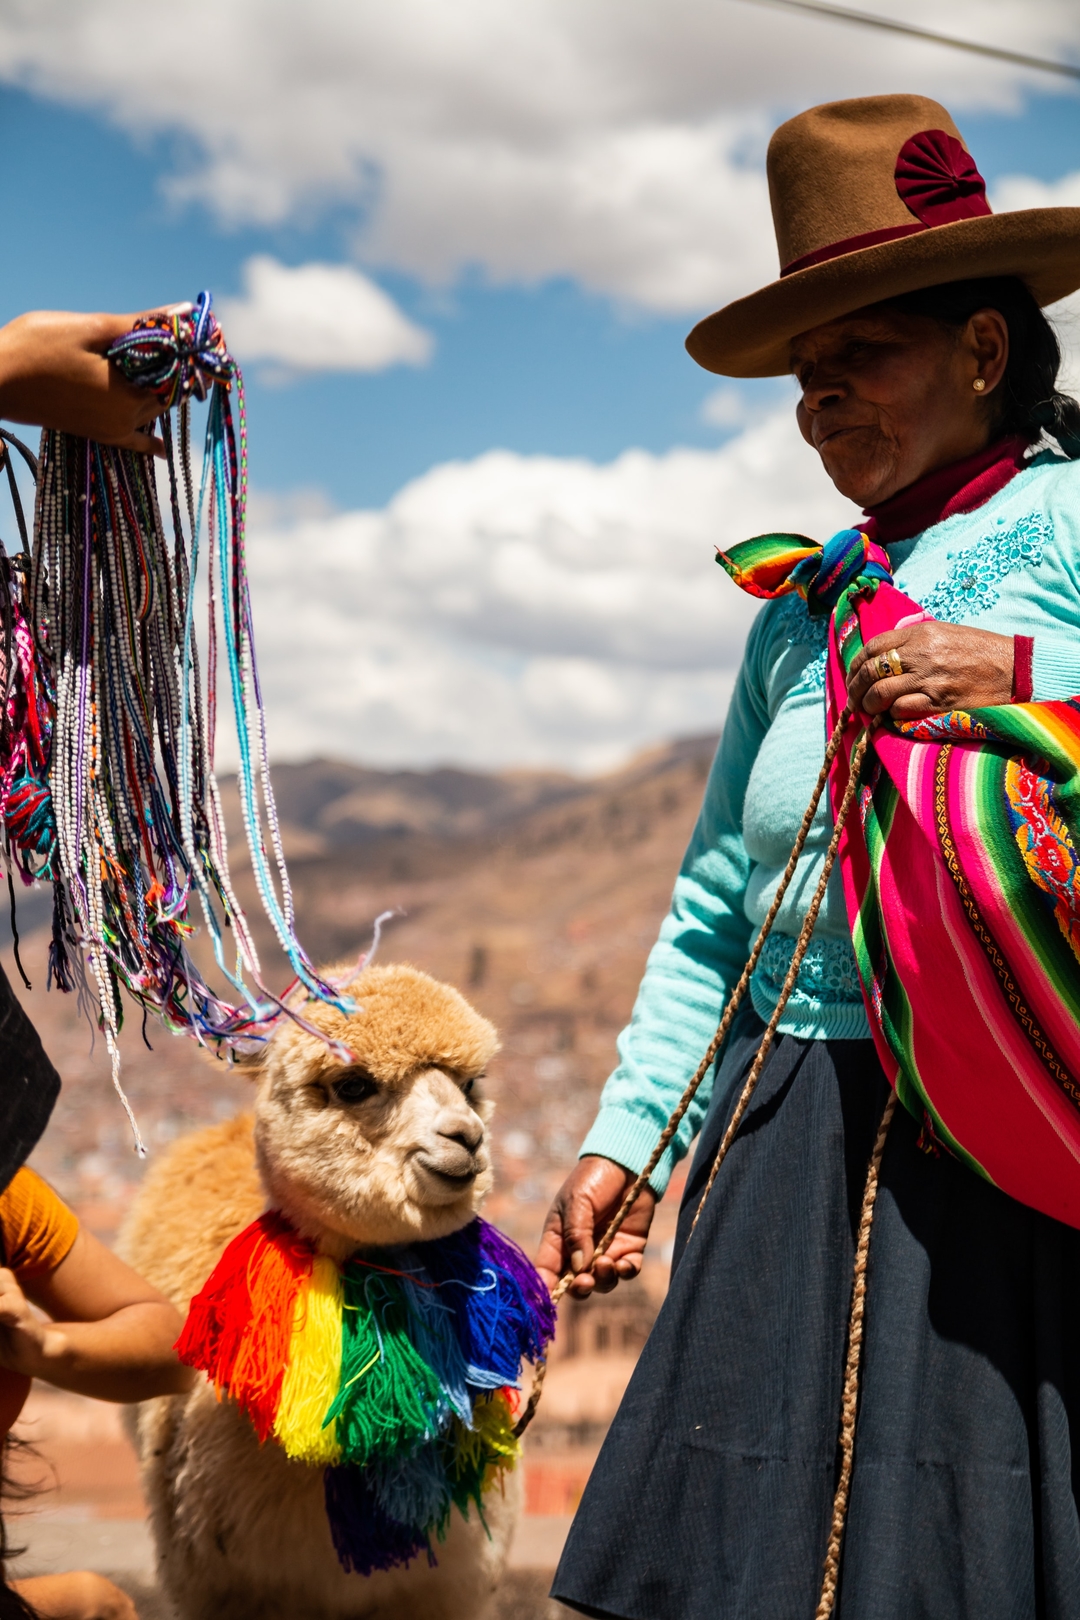 Old Peruvian lady with alpaca